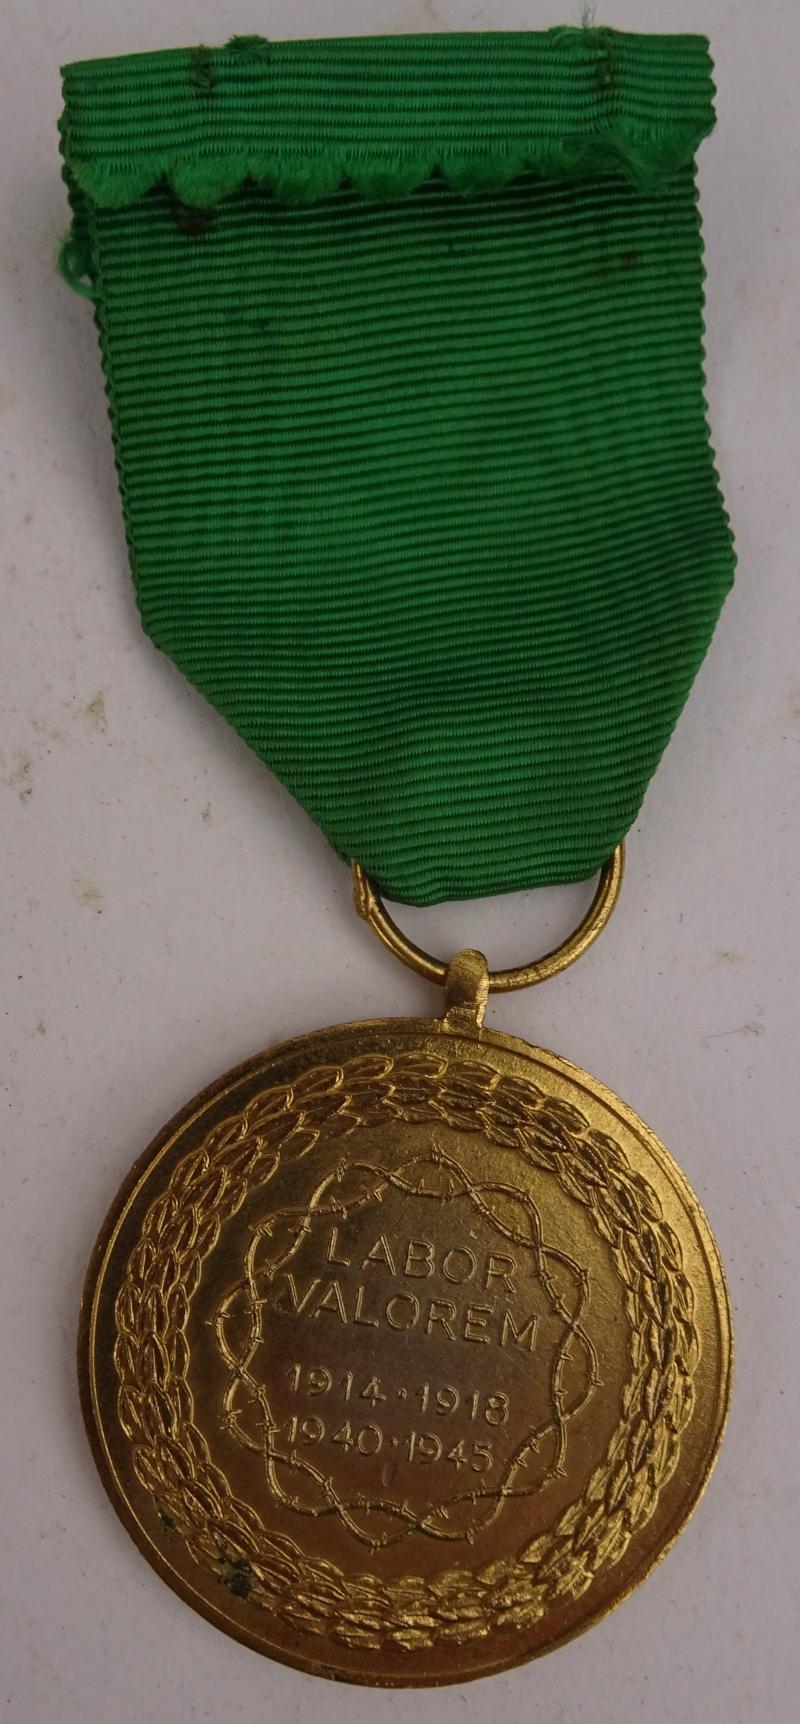 A Belgium Prisoner of The War Medal 1914-1918 and 1940-1944